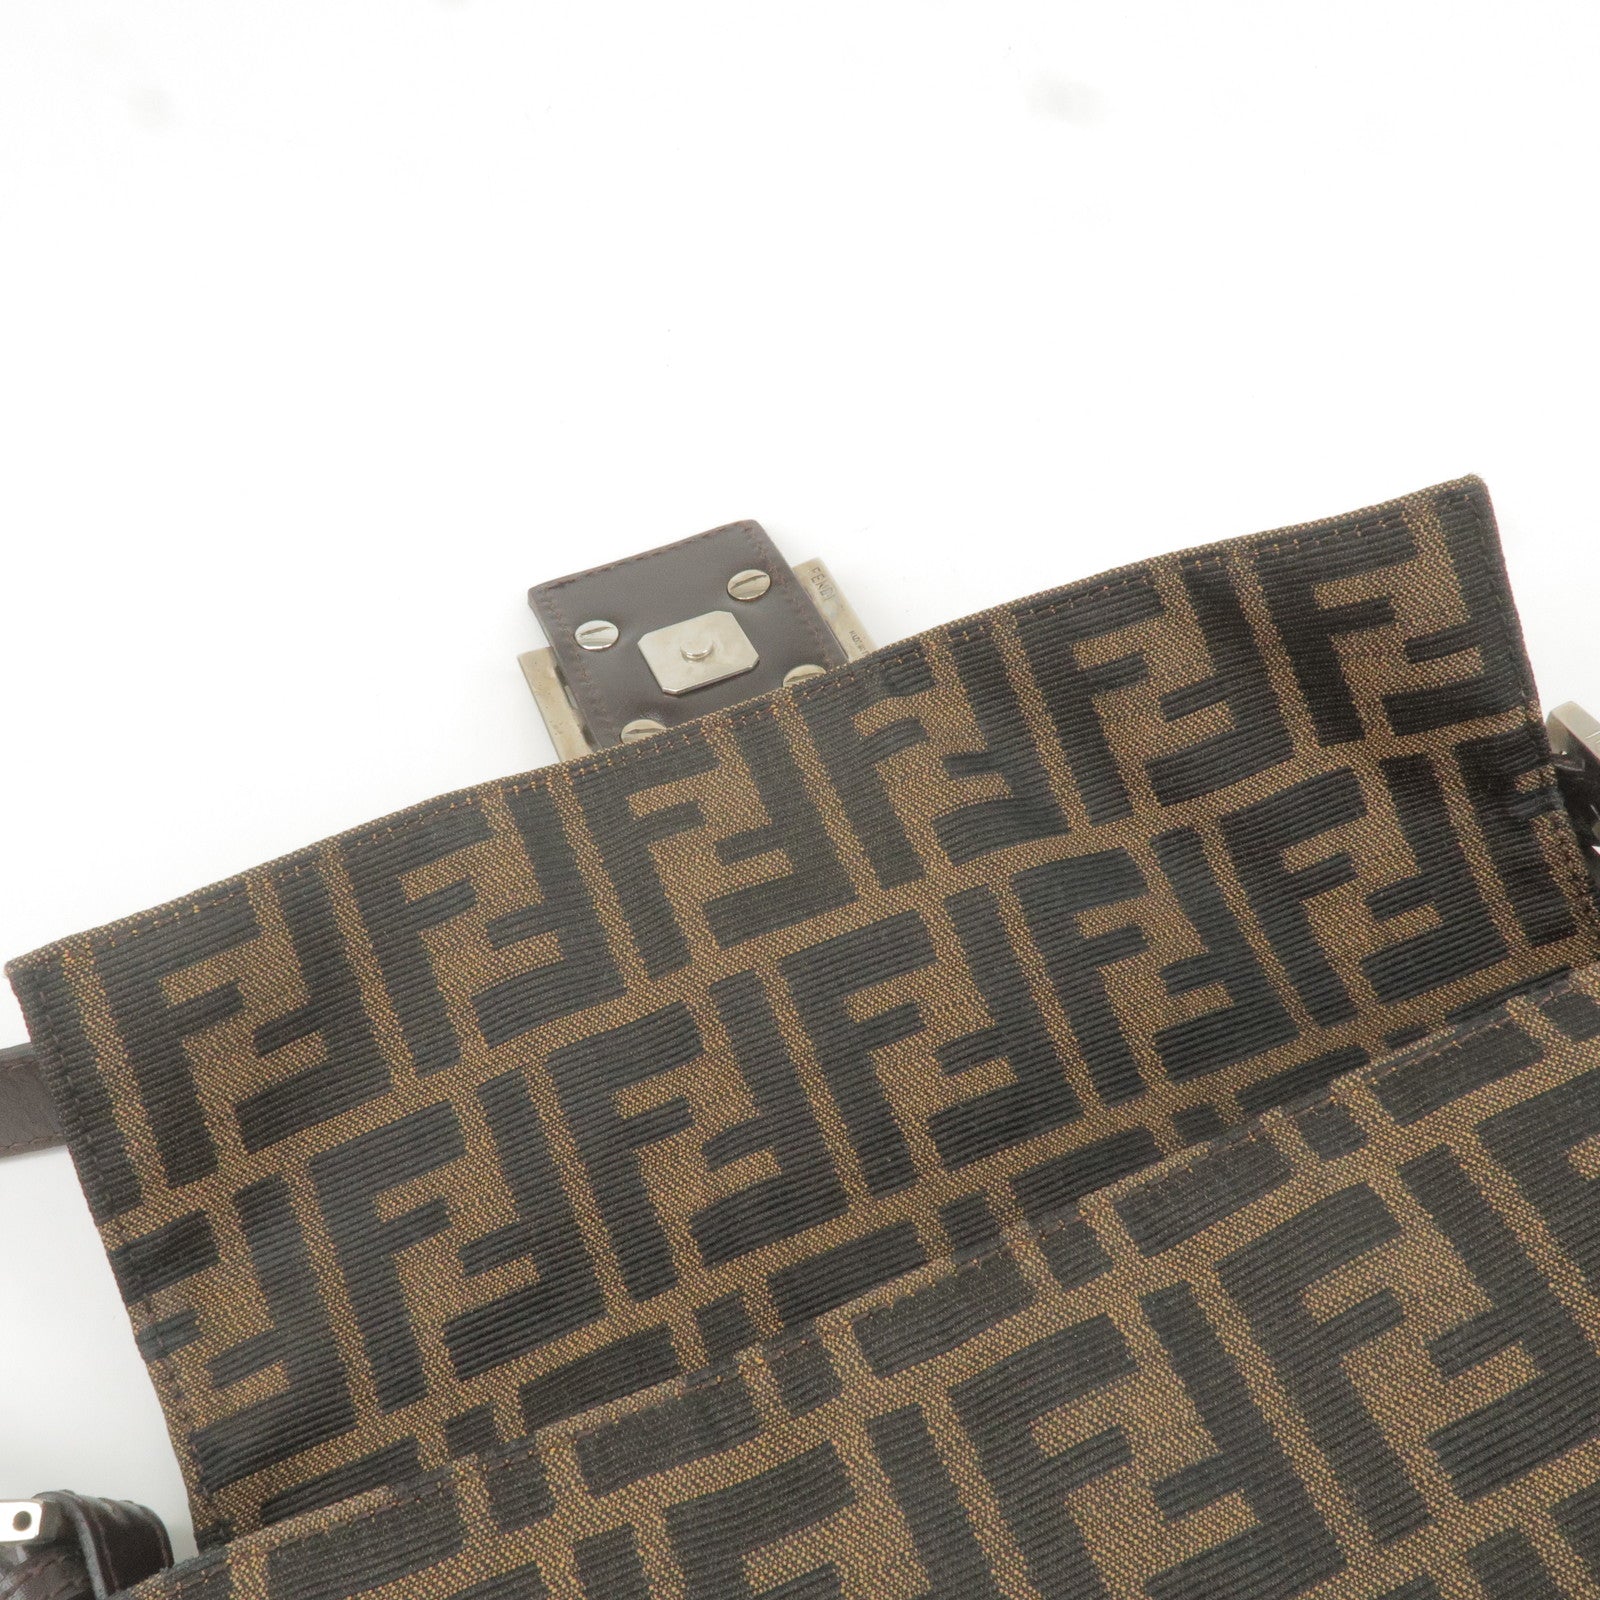 ) Authentic FENDI Zucca Pattern Wallet Purse Canvas Leather